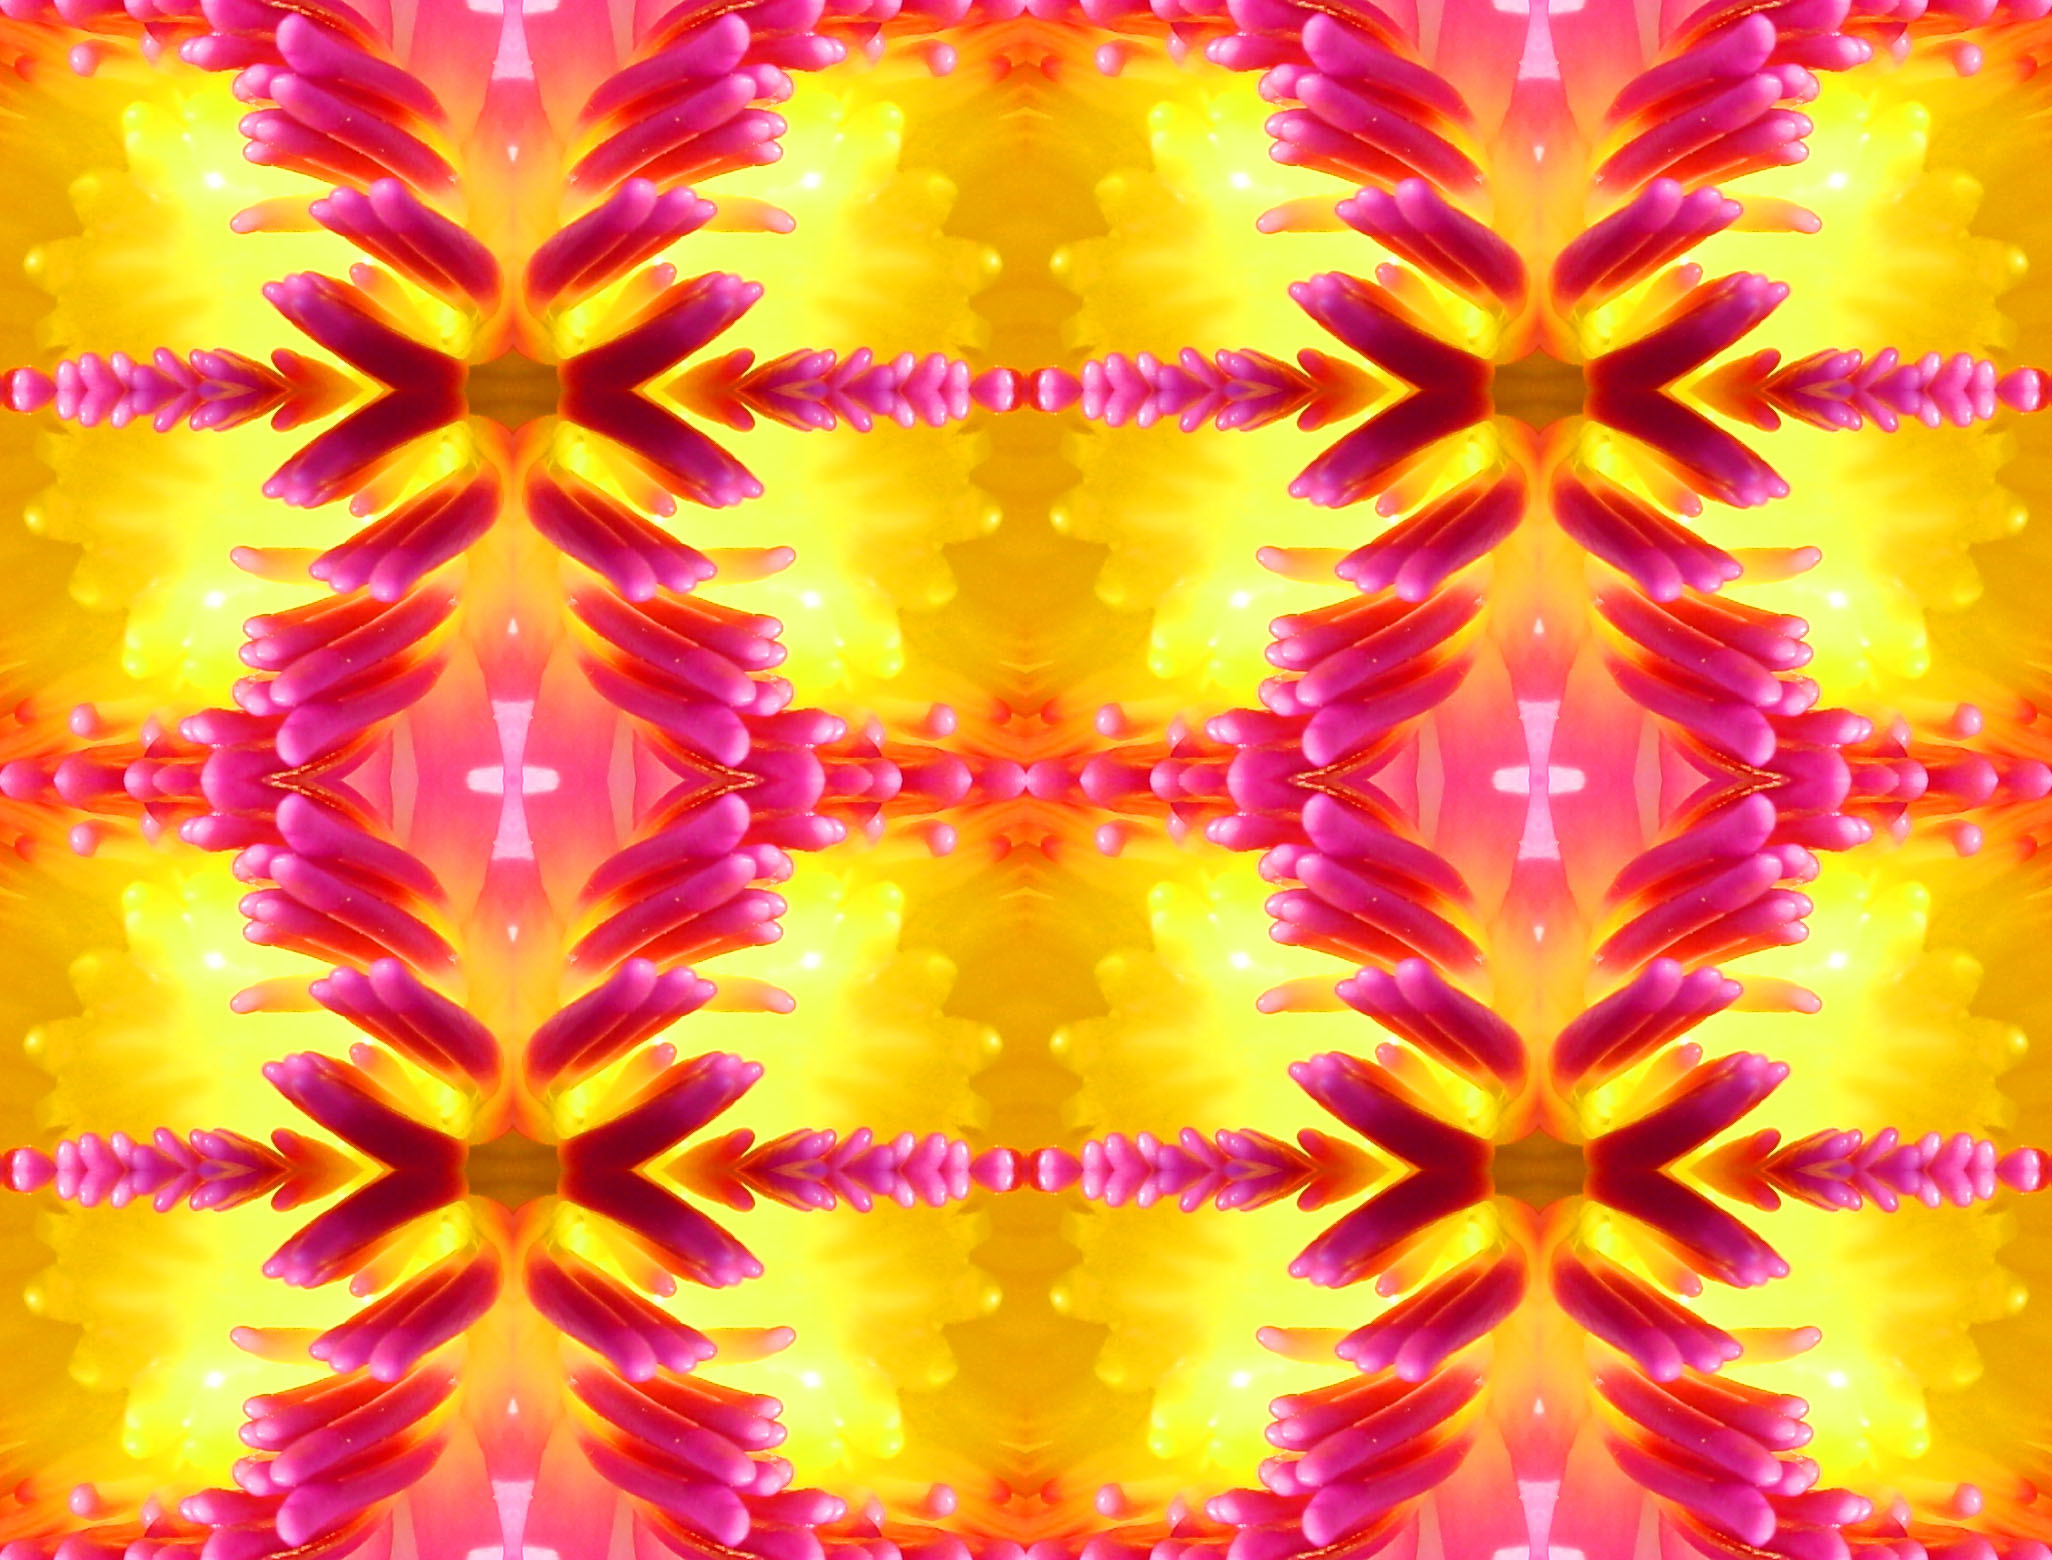 Lotus symmetry, Abstract, Fractal, Pink, Symmetrical, HQ Photo